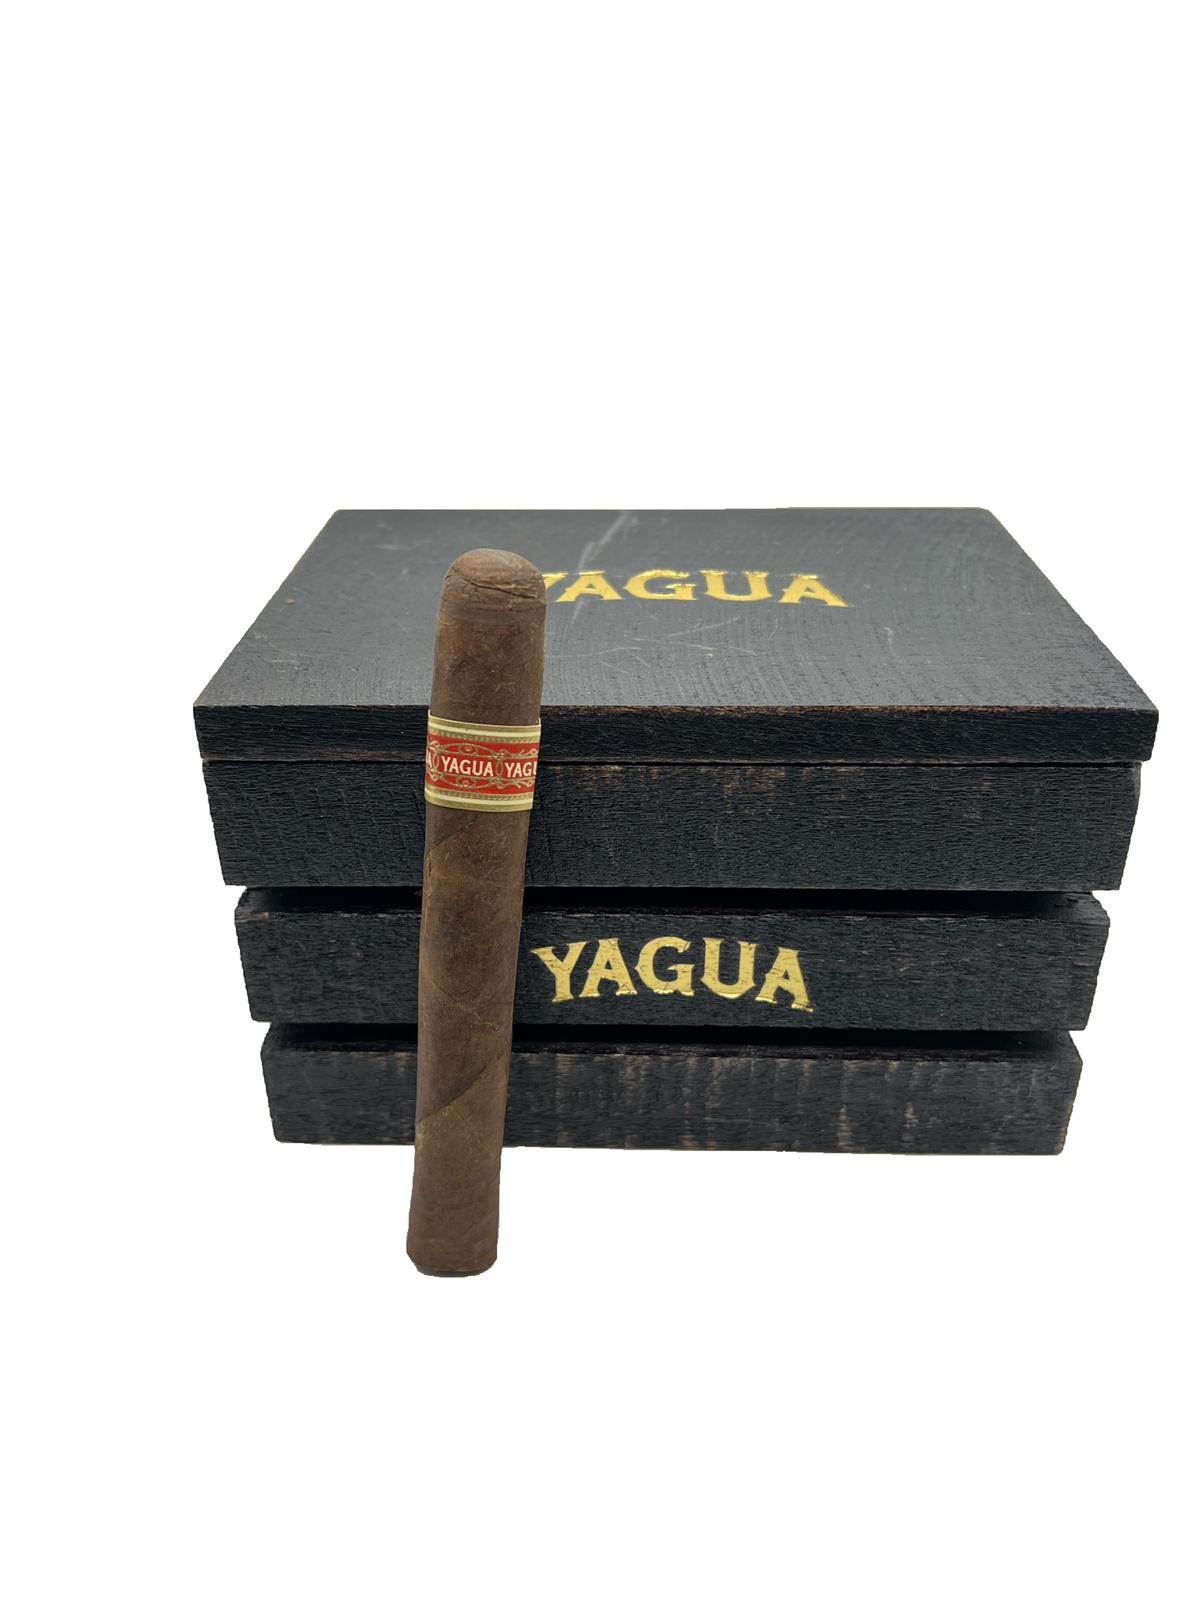 YAGUA - J.C. Newman Cigar Co.